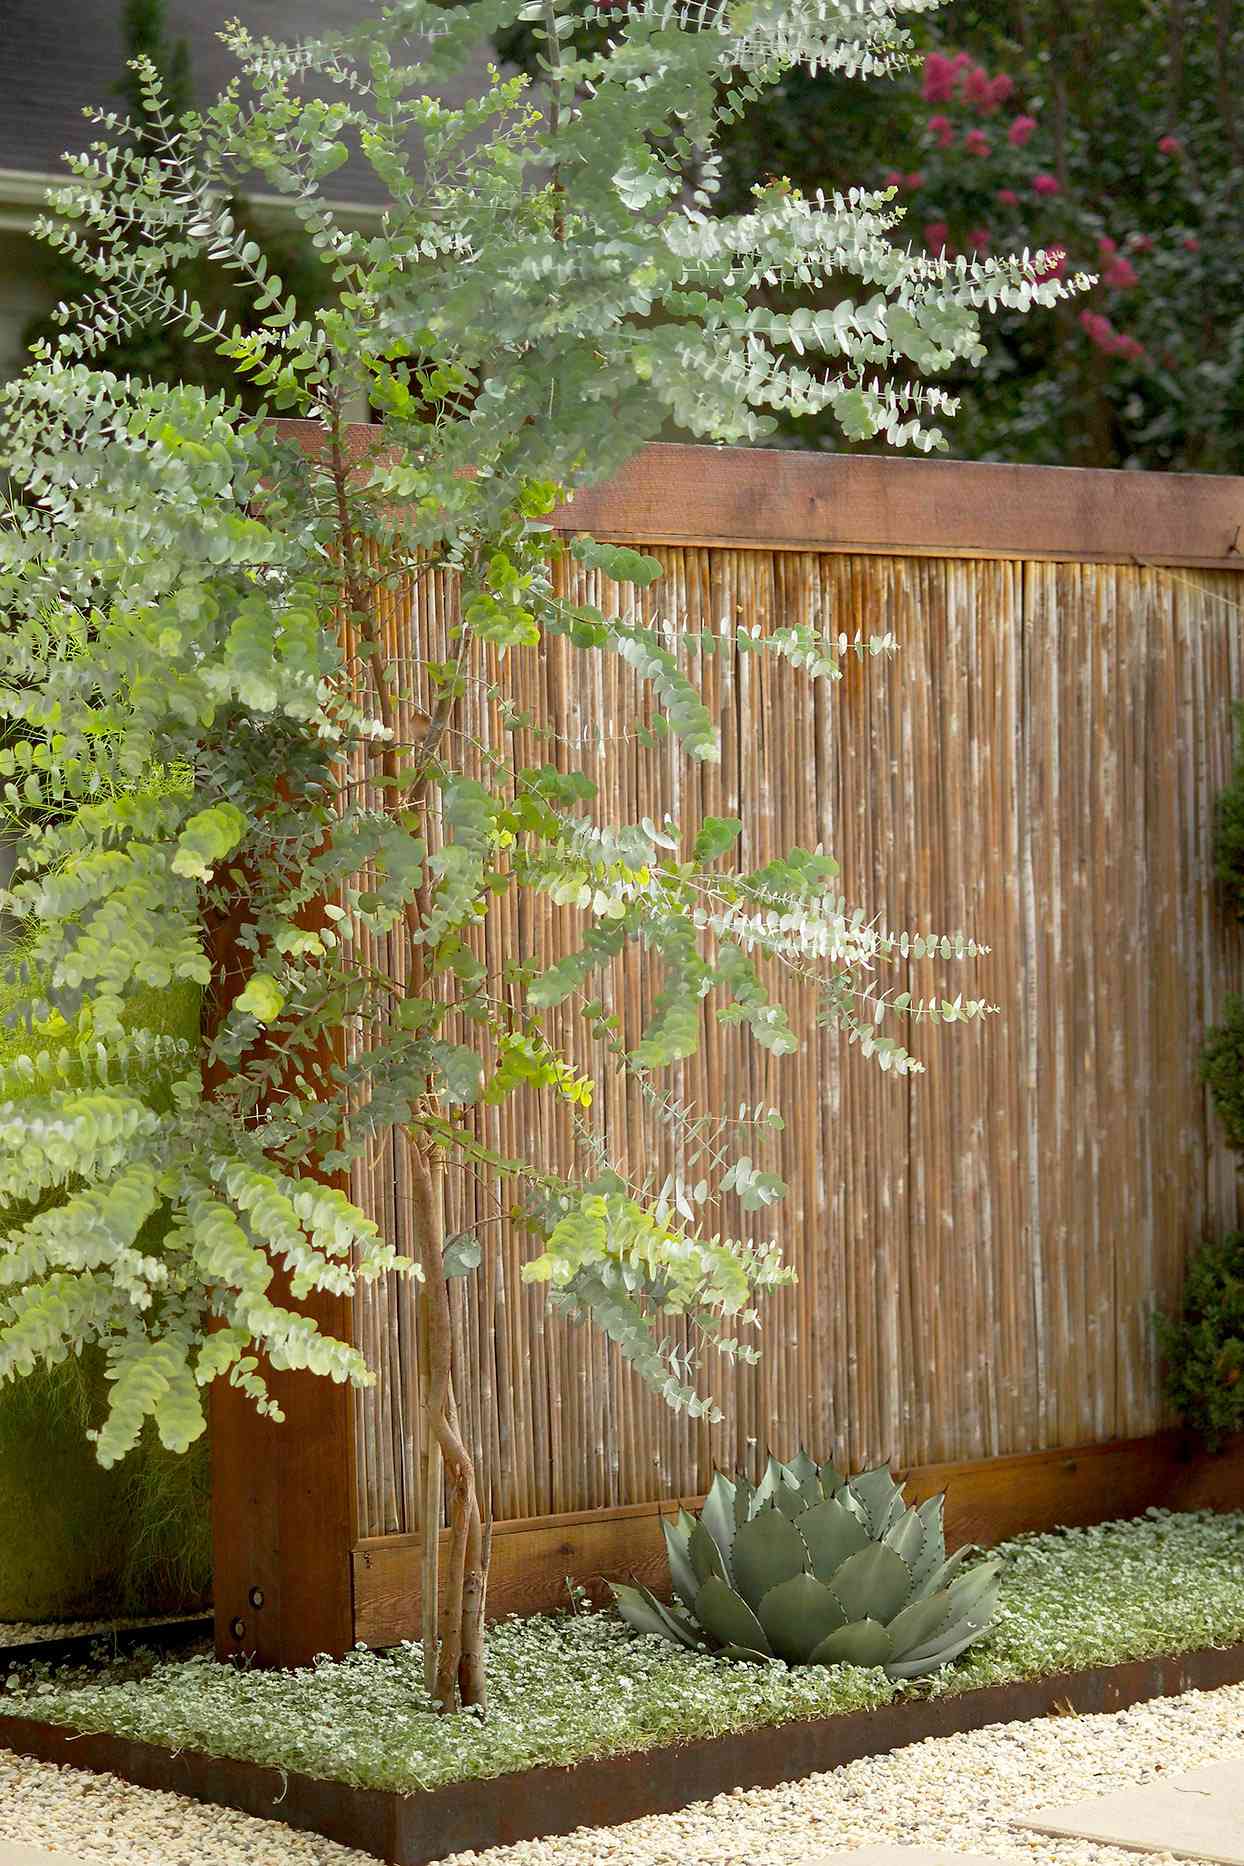 Eucalyptus tree near wooden fence